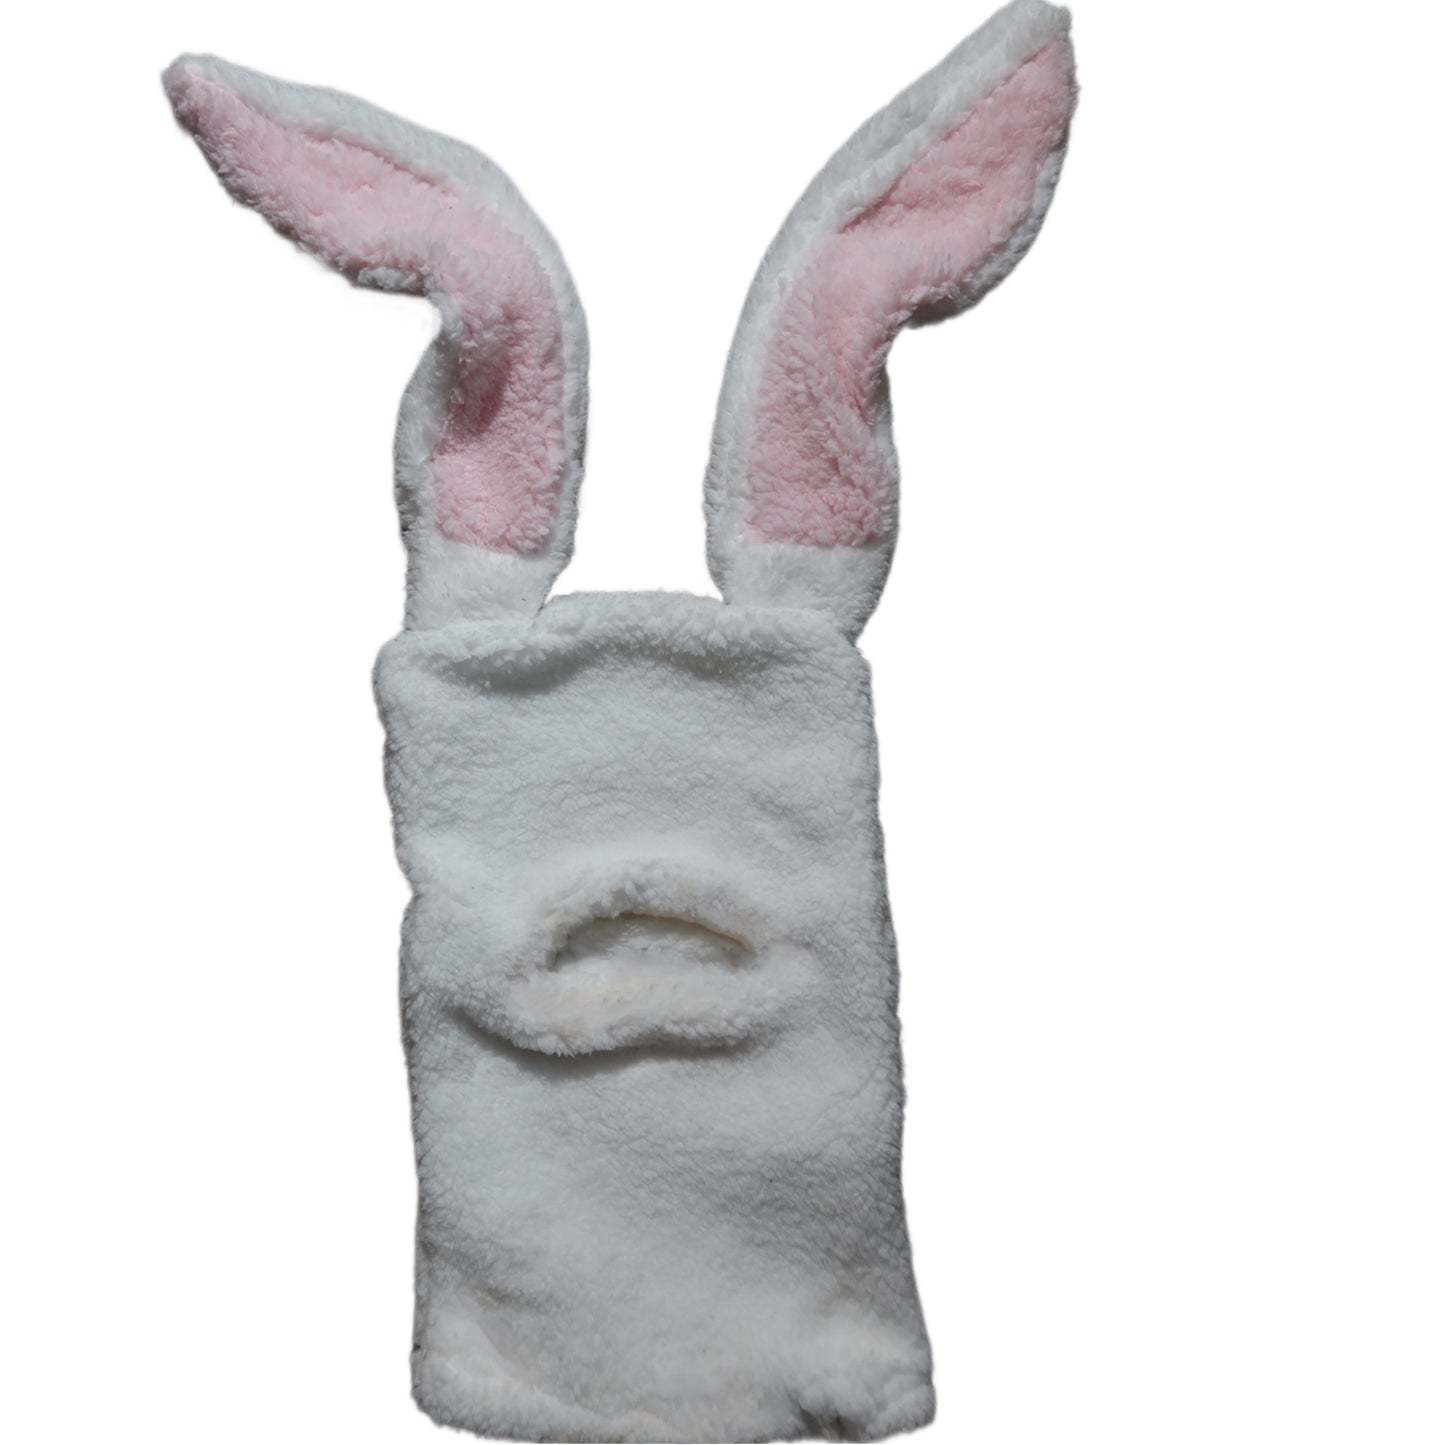 White bunny plush mask